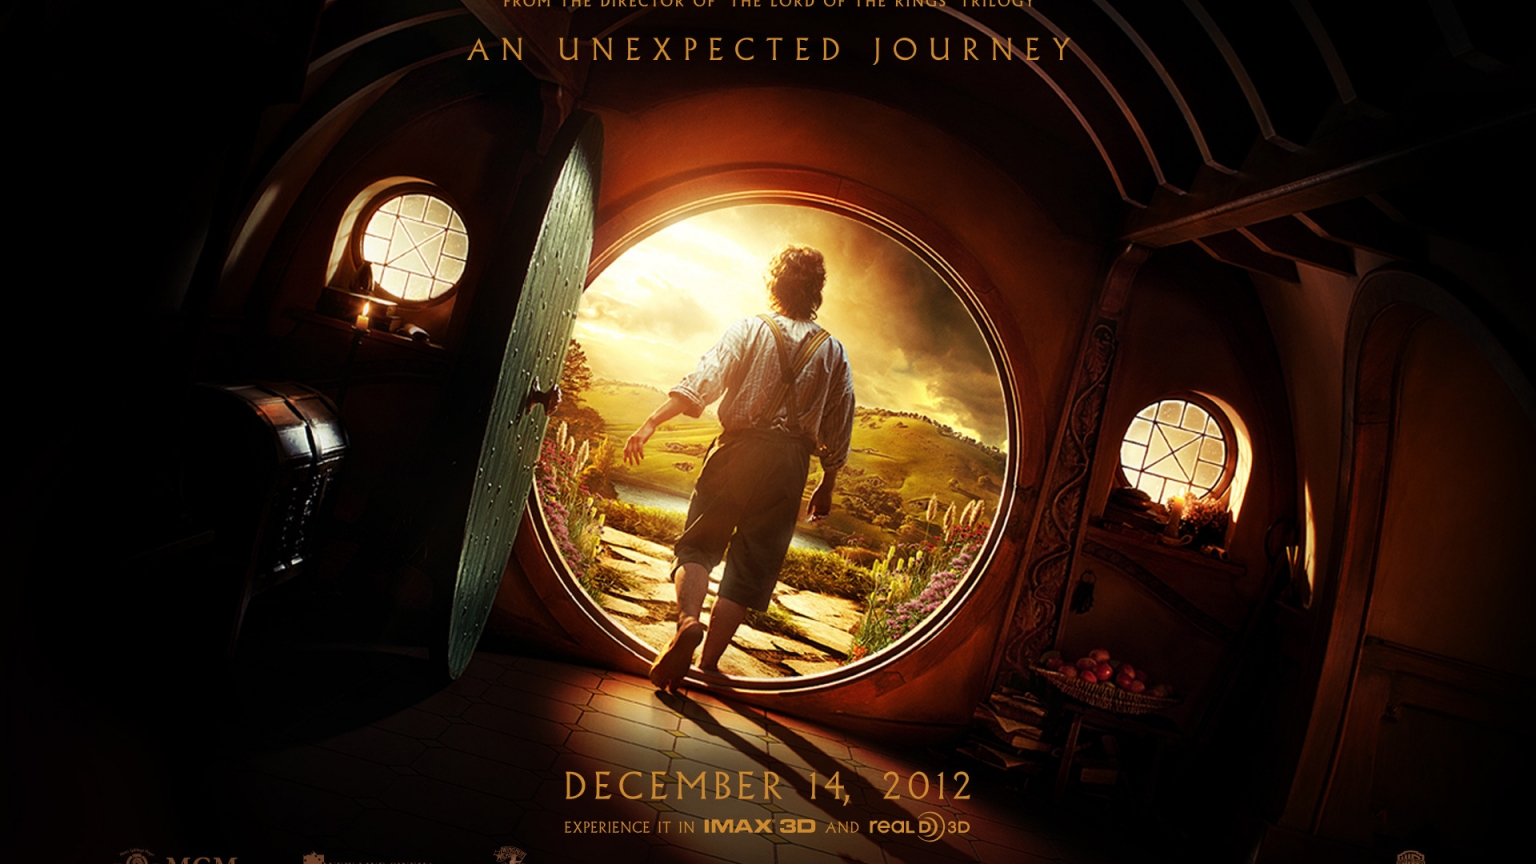 The Hobbit 2012 Movie for 1536 x 864 HDTV resolution